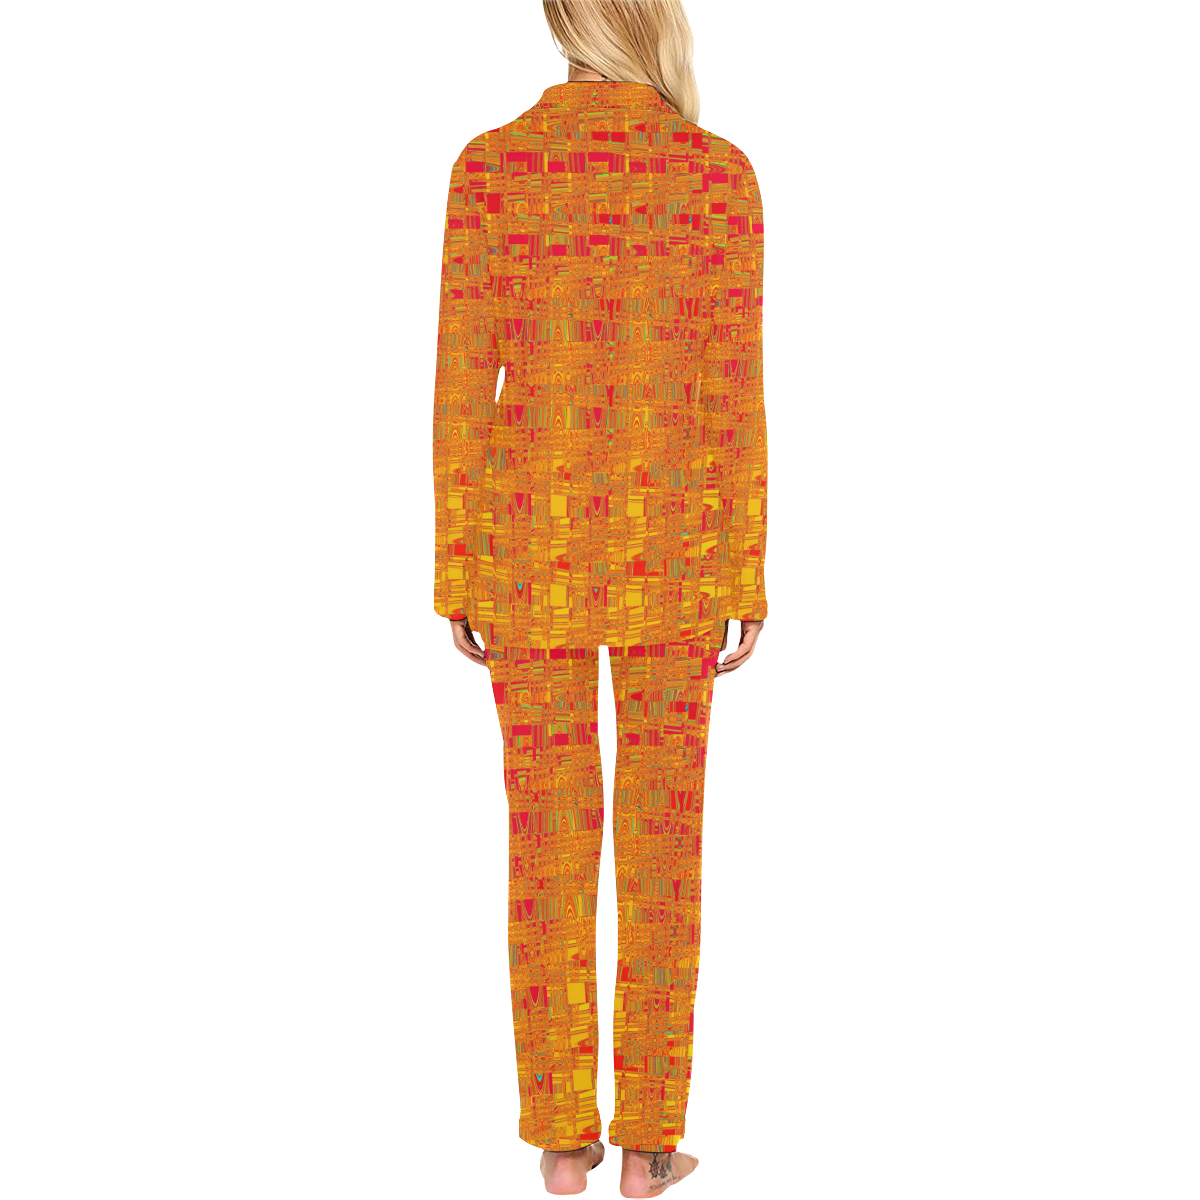 POPPY SHINE PJS Women's Long Pajama Set